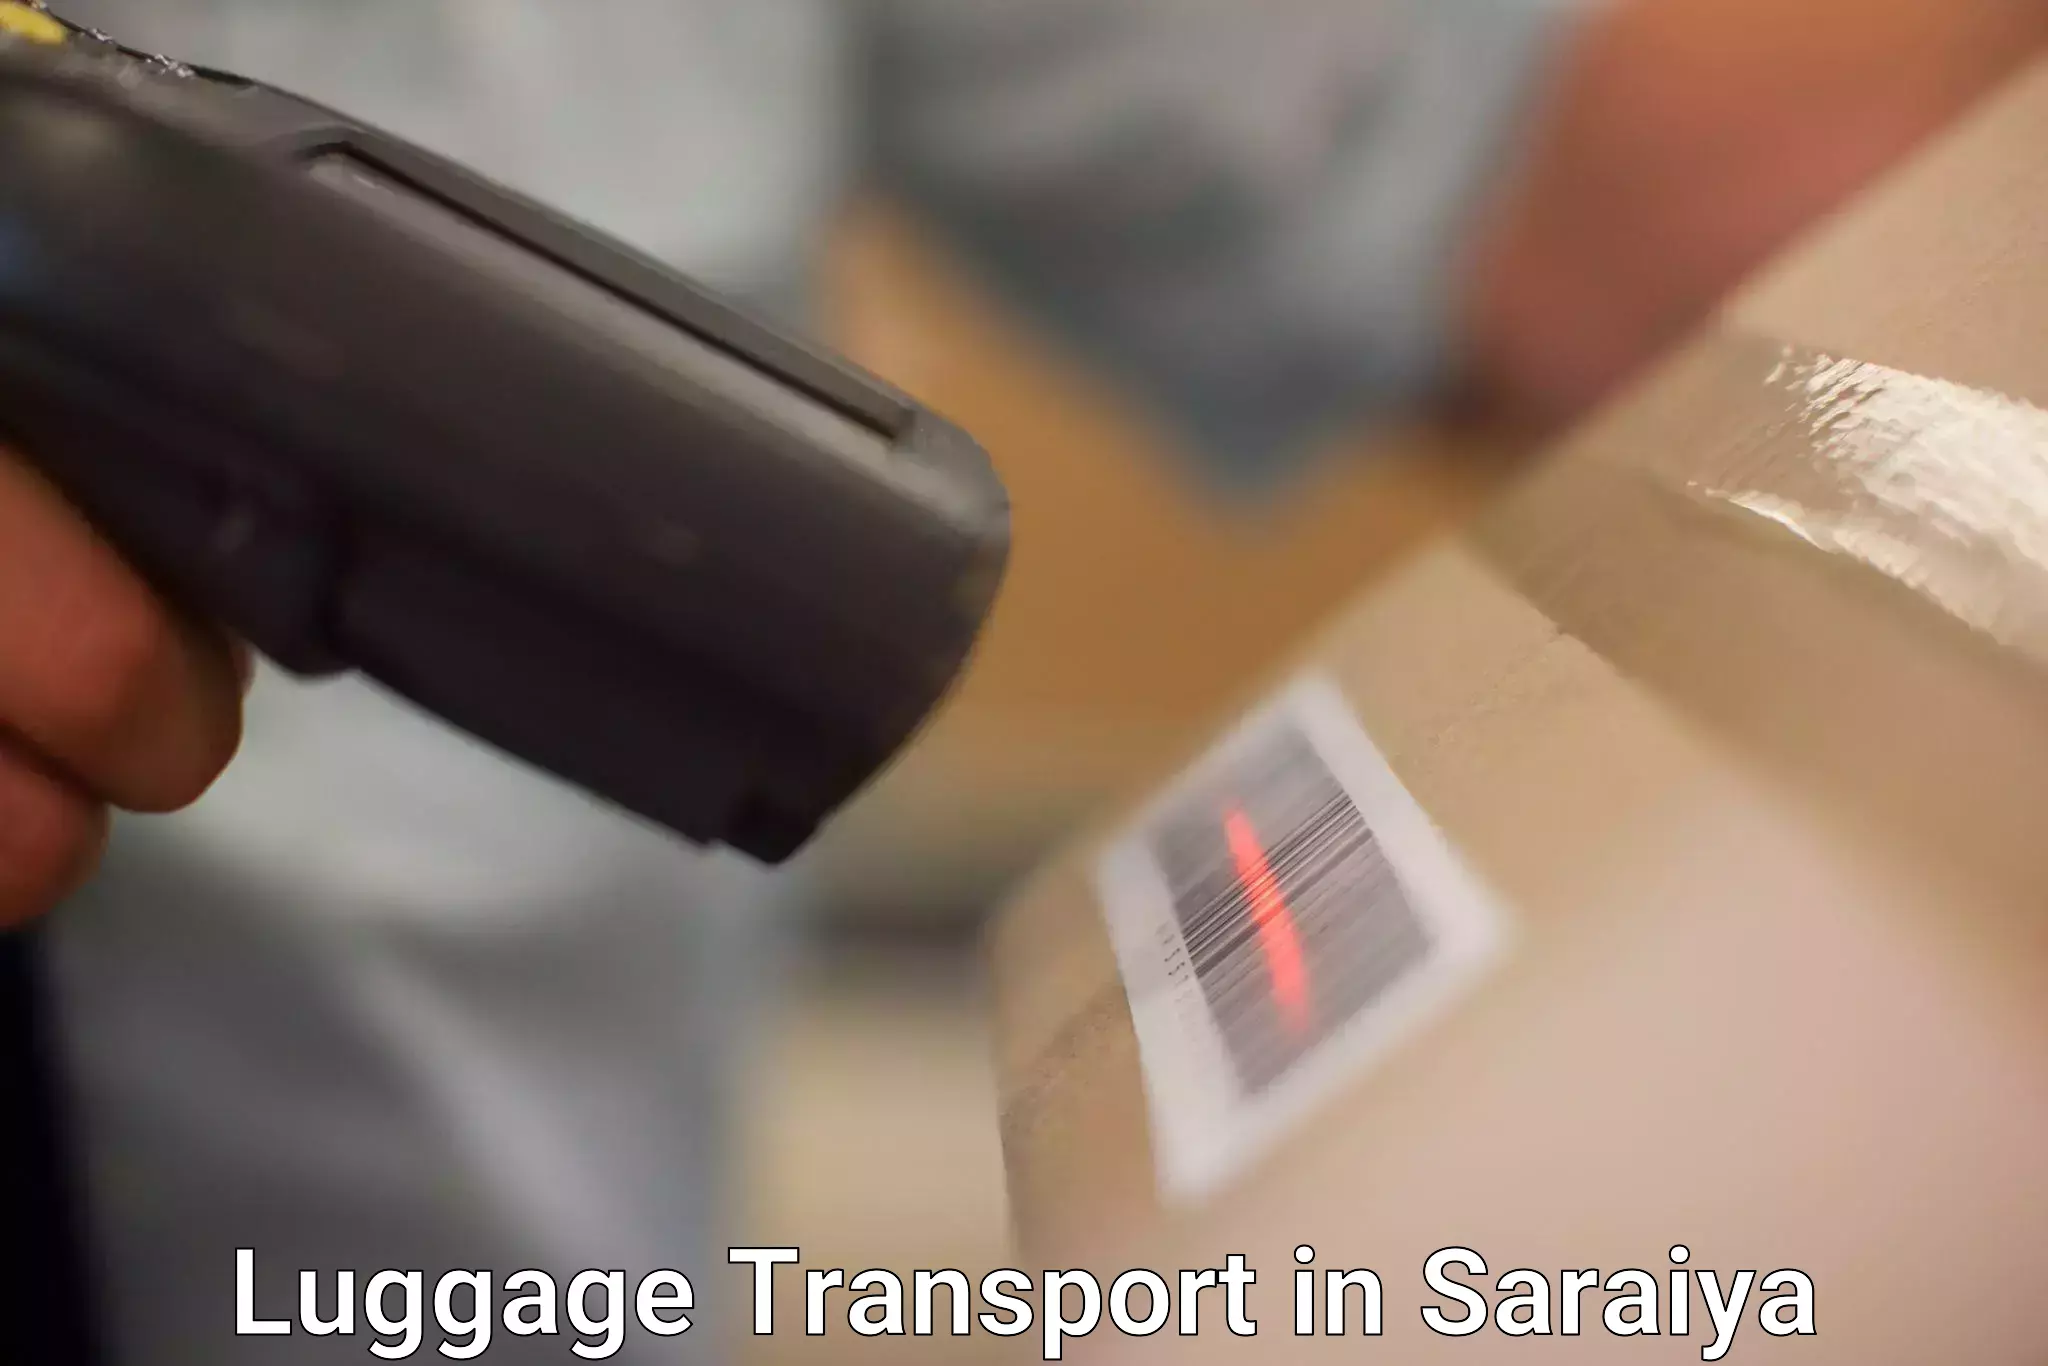 Luggage shipment tracking in Saraiya